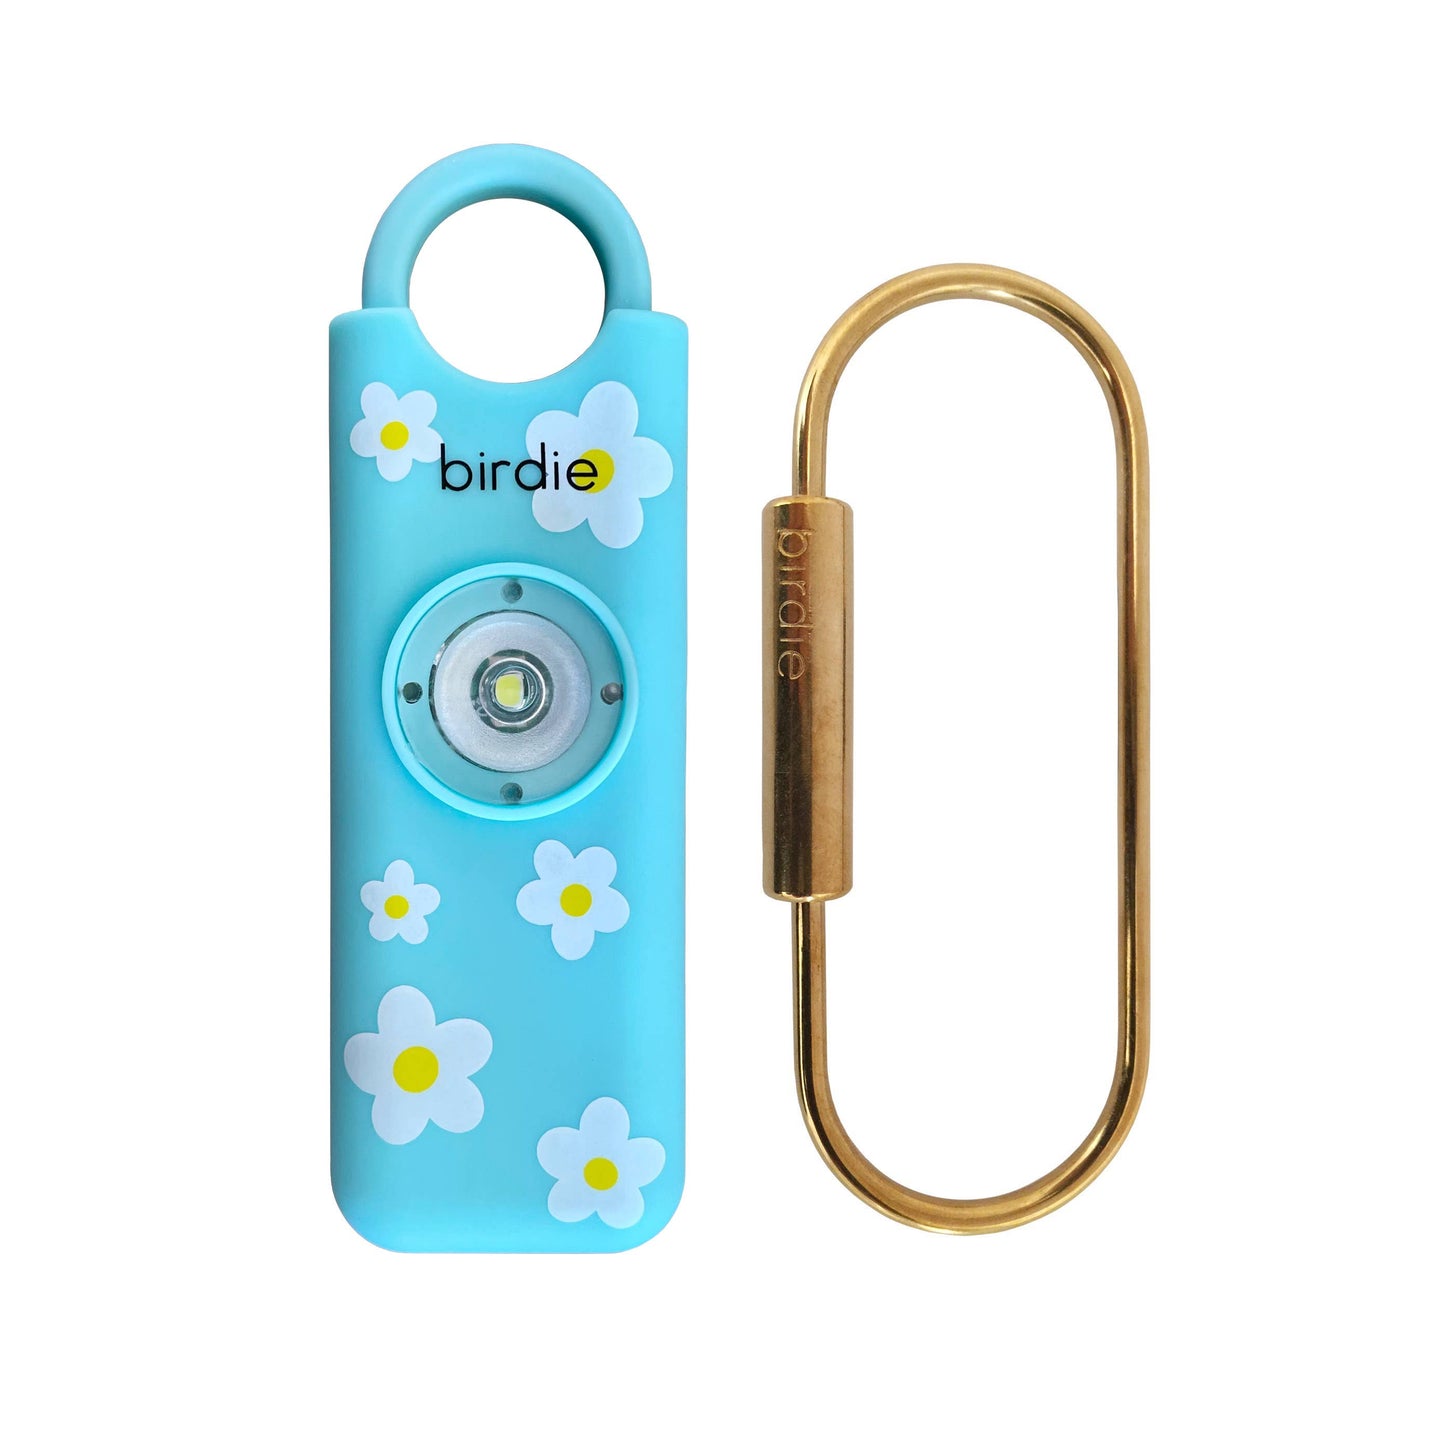 She's Birdie - She's Birdie Personal Safety Alarm: Single / Metallic Silver